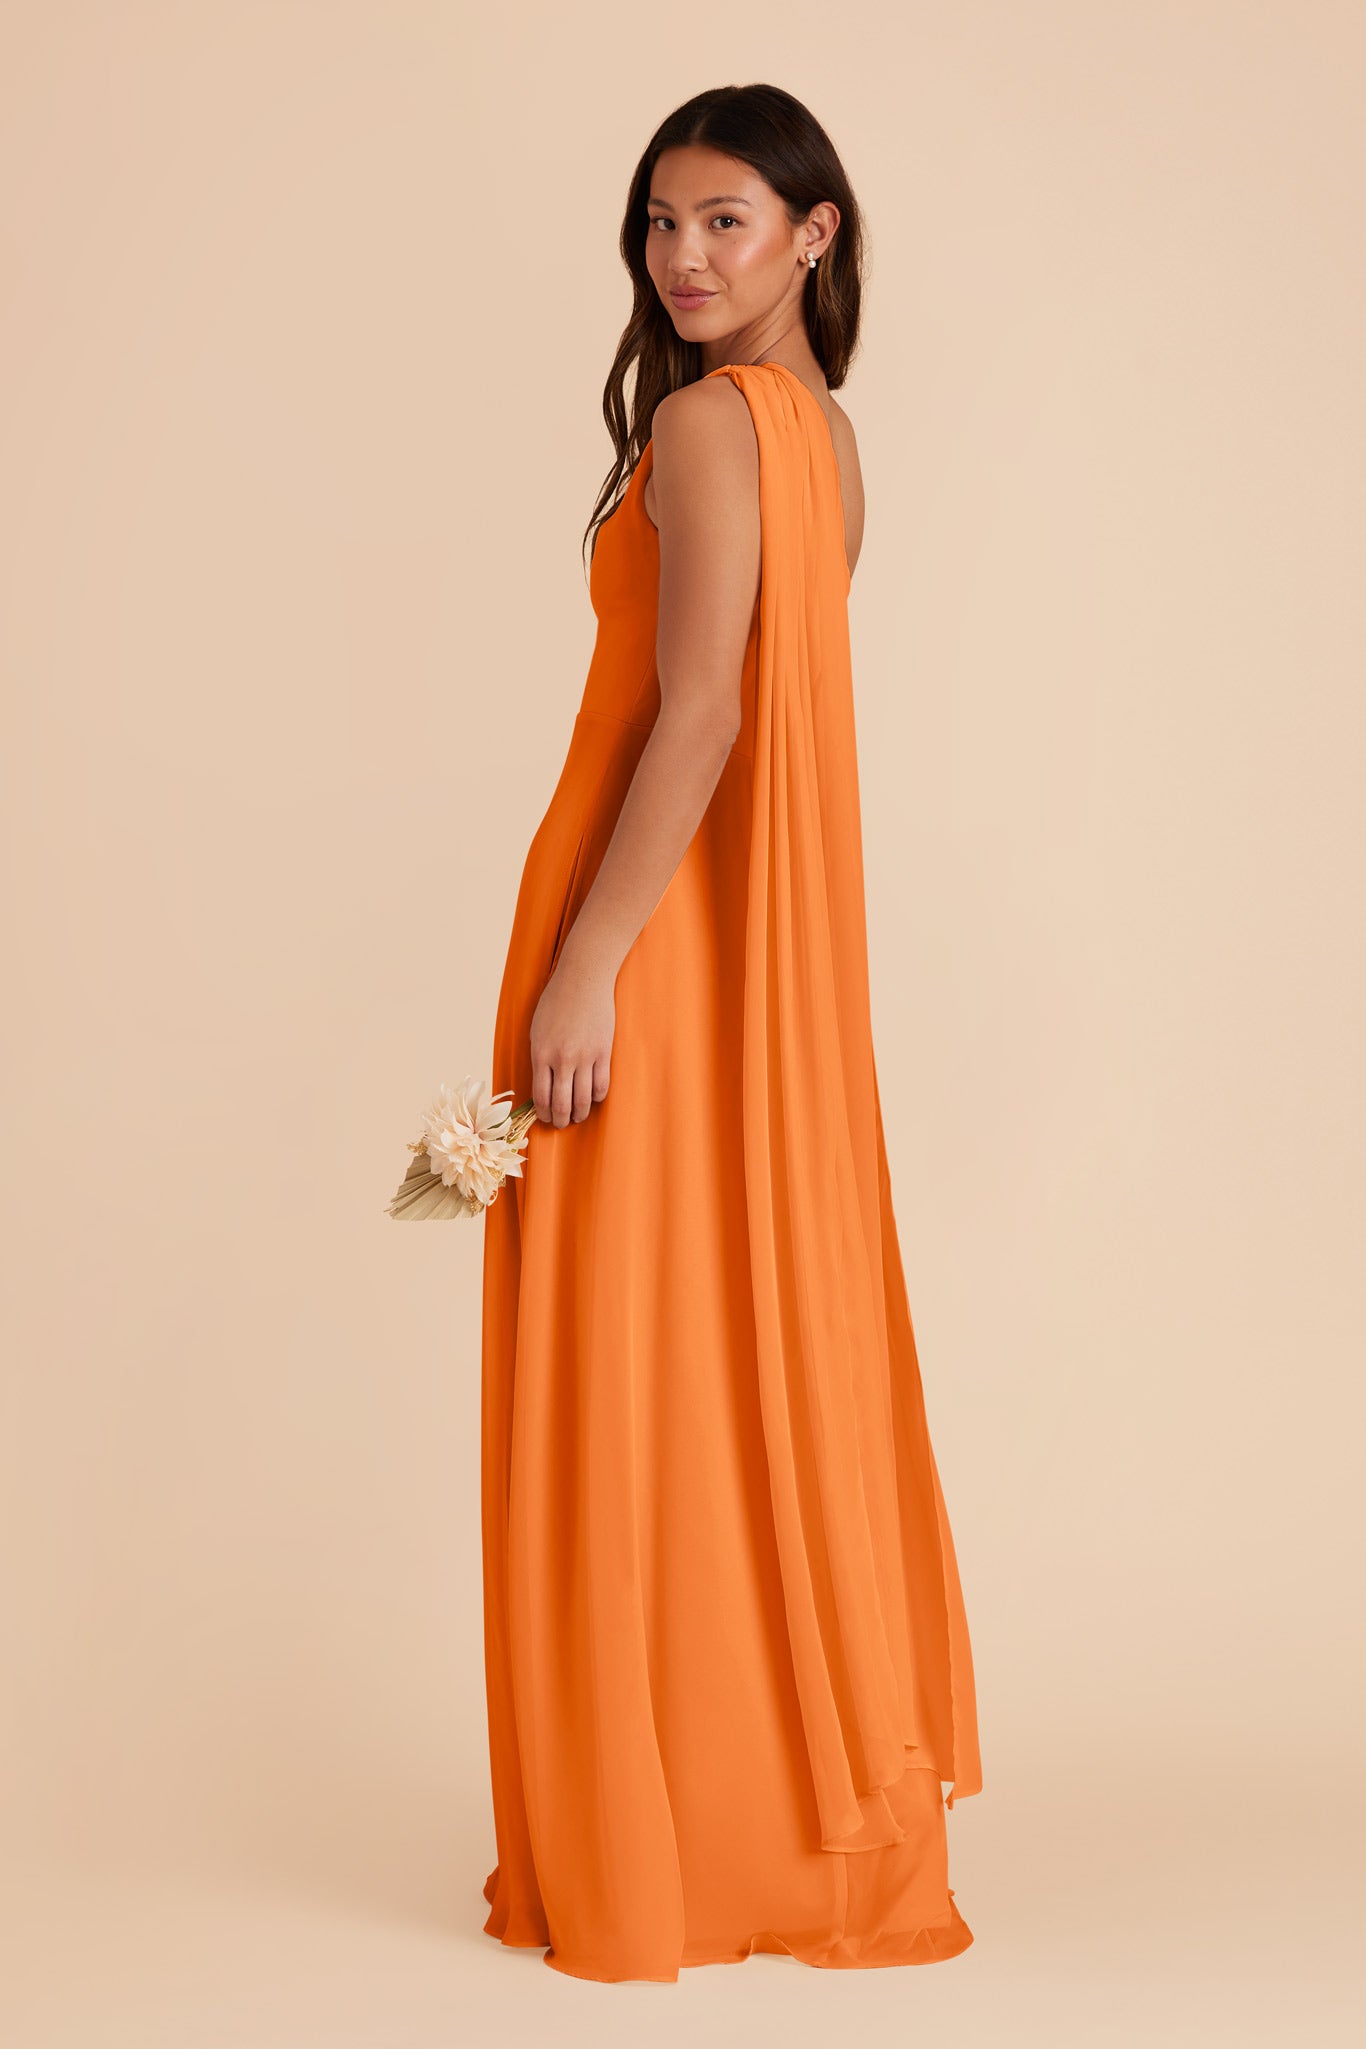 Apricot Melissa Chiffon Dress by Birdy Grey